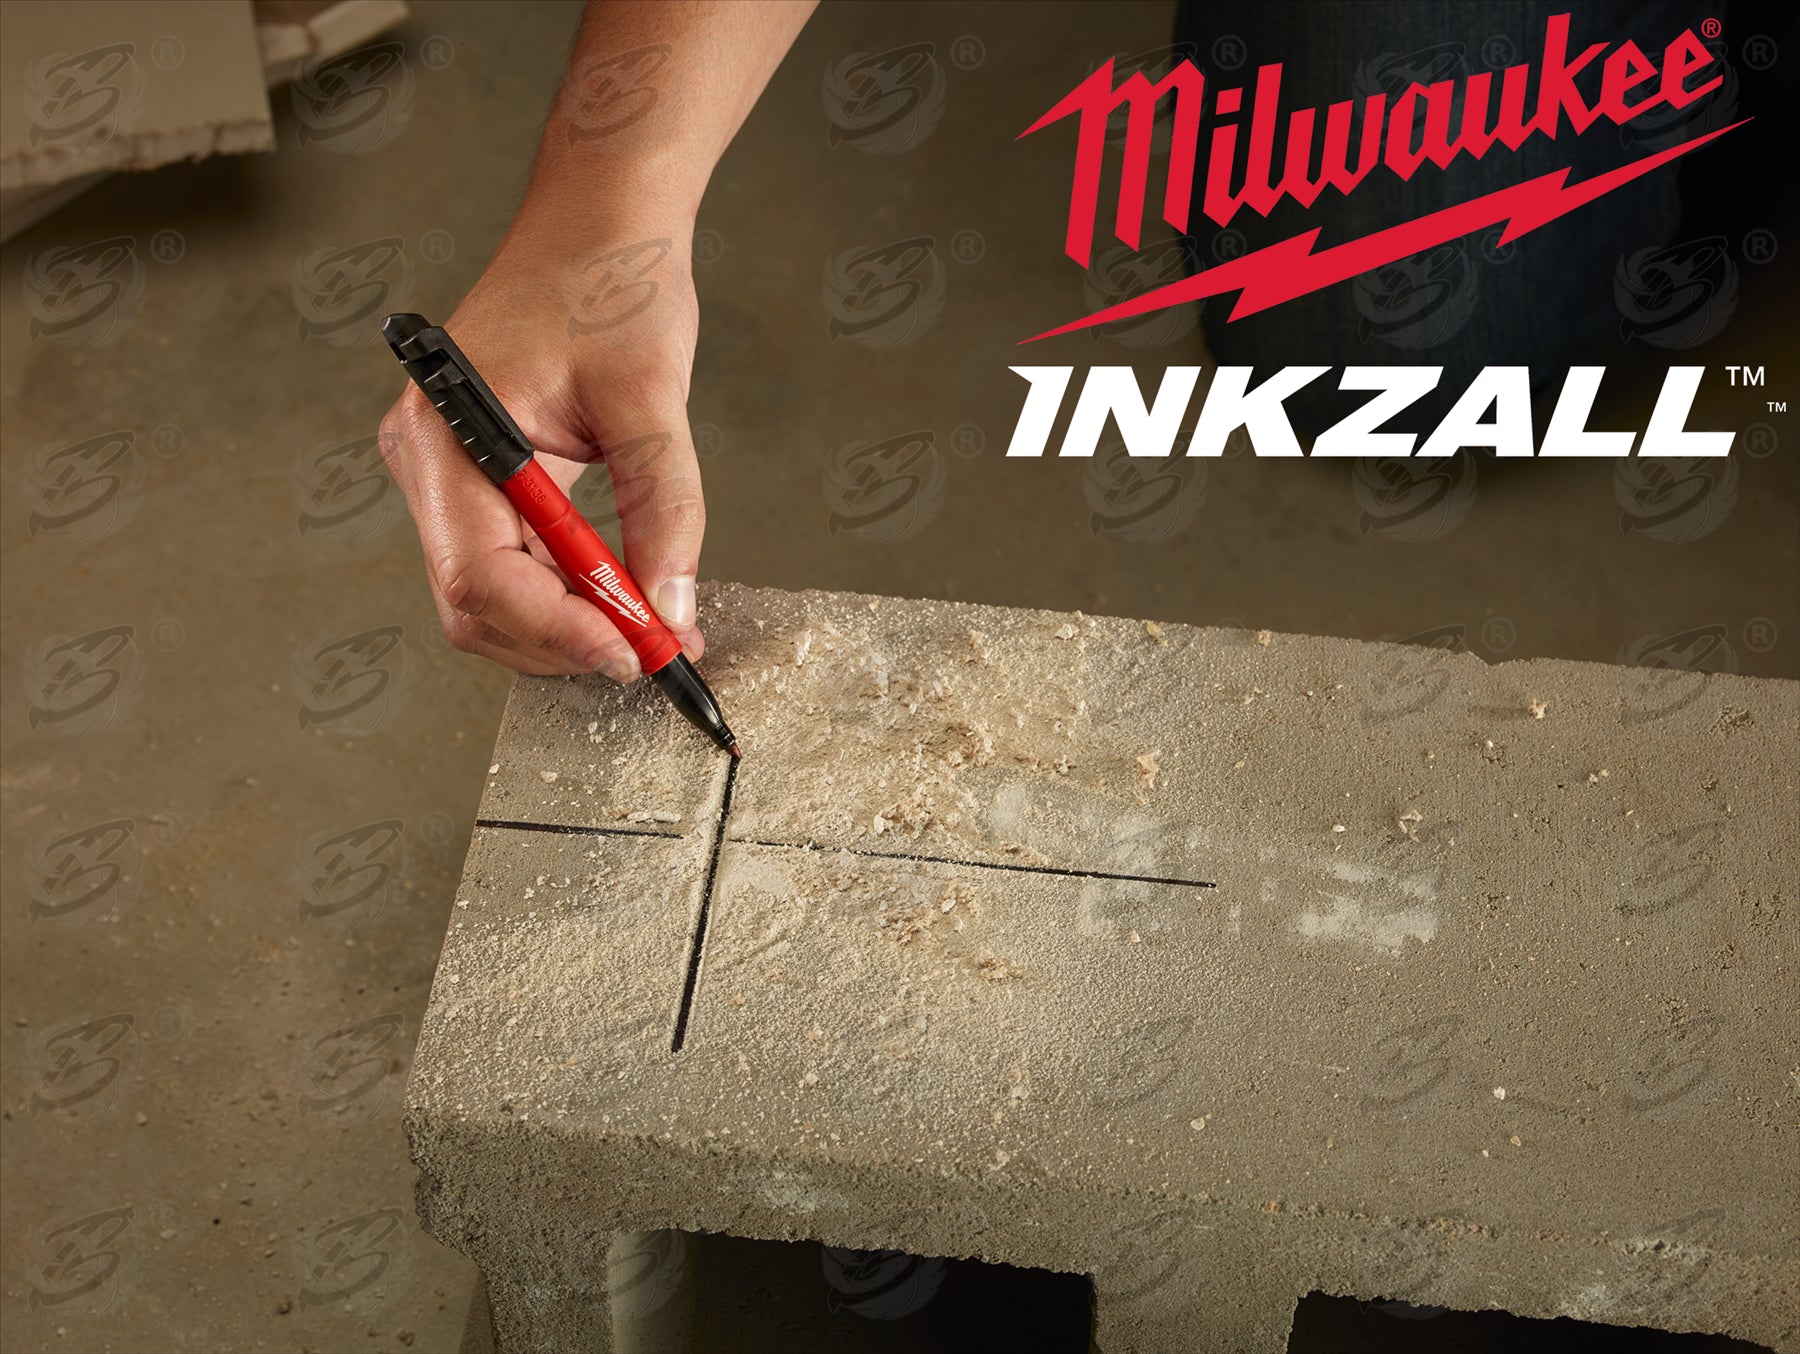 MILWAUKEE INKZALL 1mm ALL SURFACE MARKER PEN ( x6 )